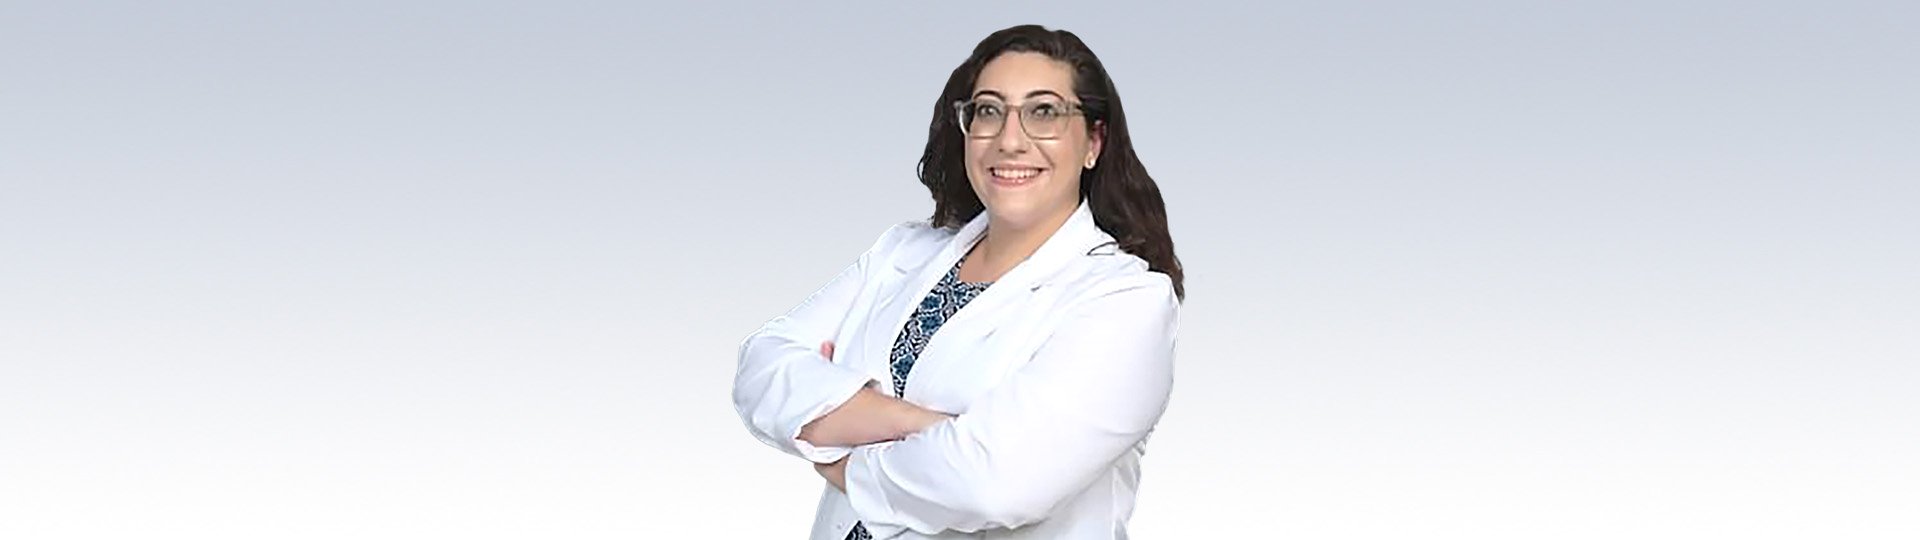 Dr. Eleni Santarelli – Audiologist at HearingLife